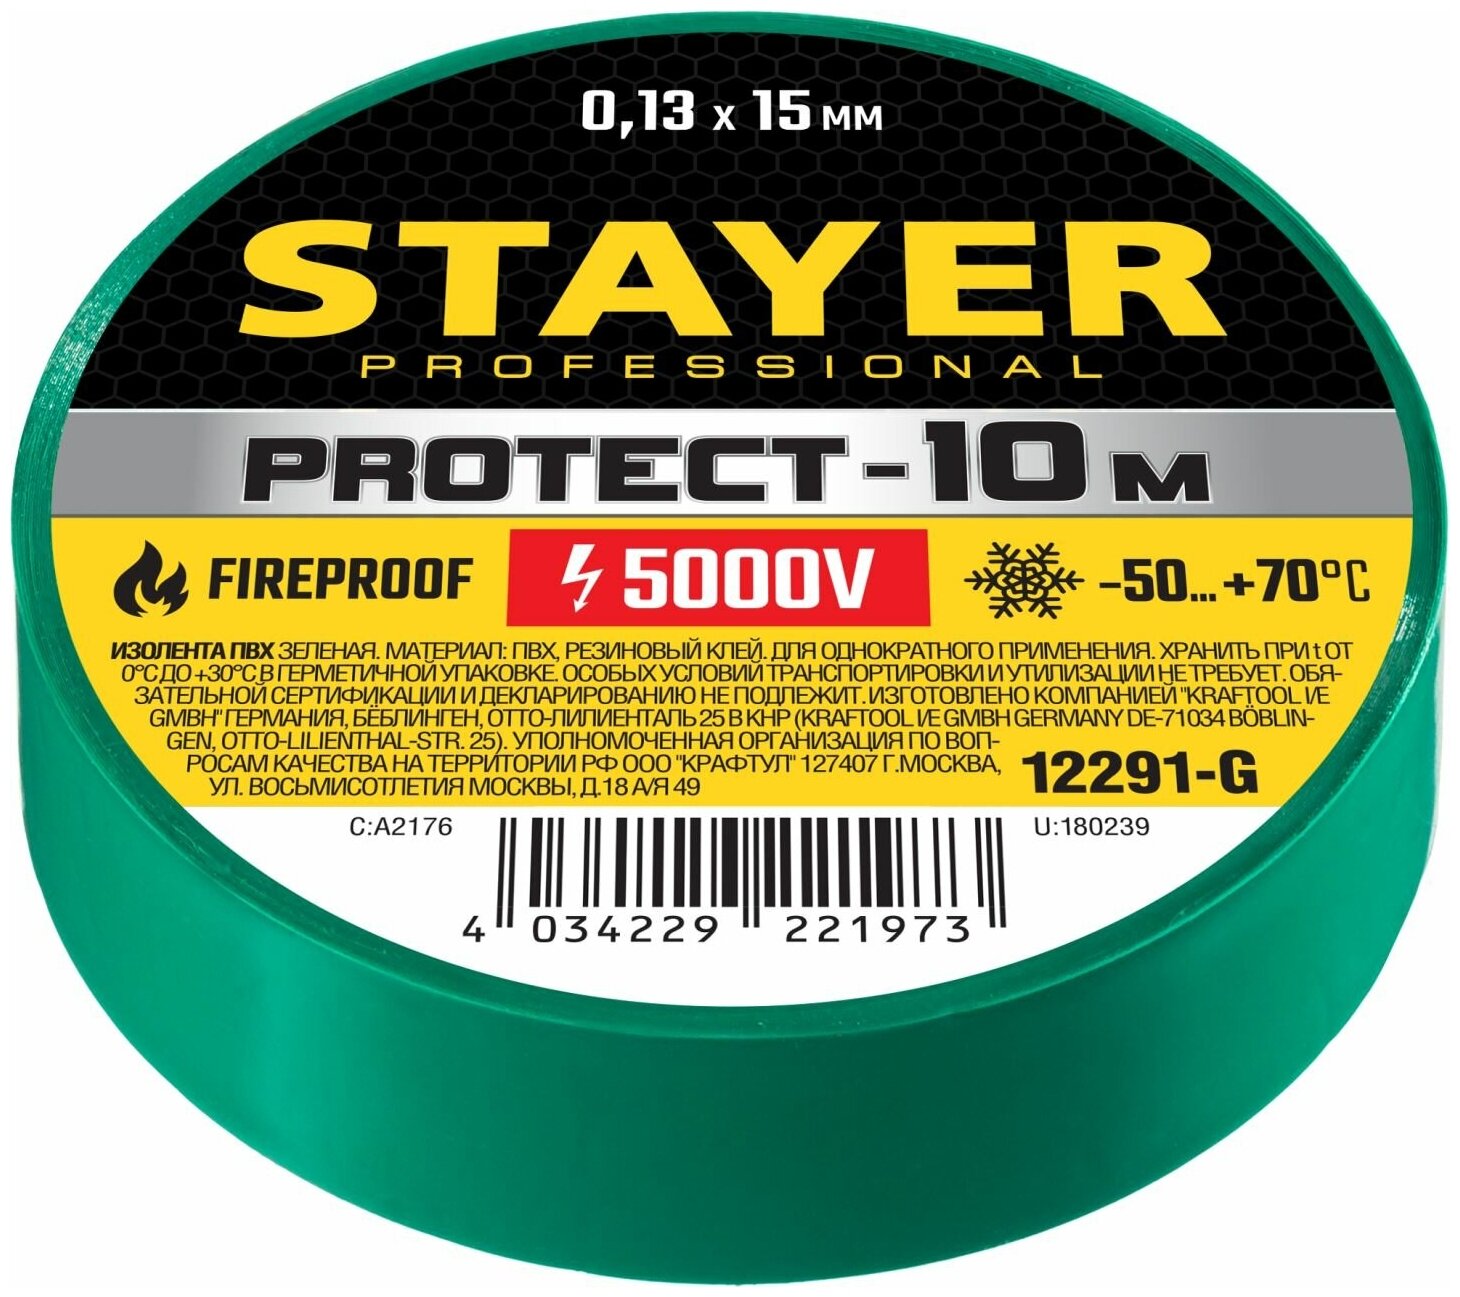 STAYER Protect-10 зеленая изолента ПВХ, 10м х 15мм